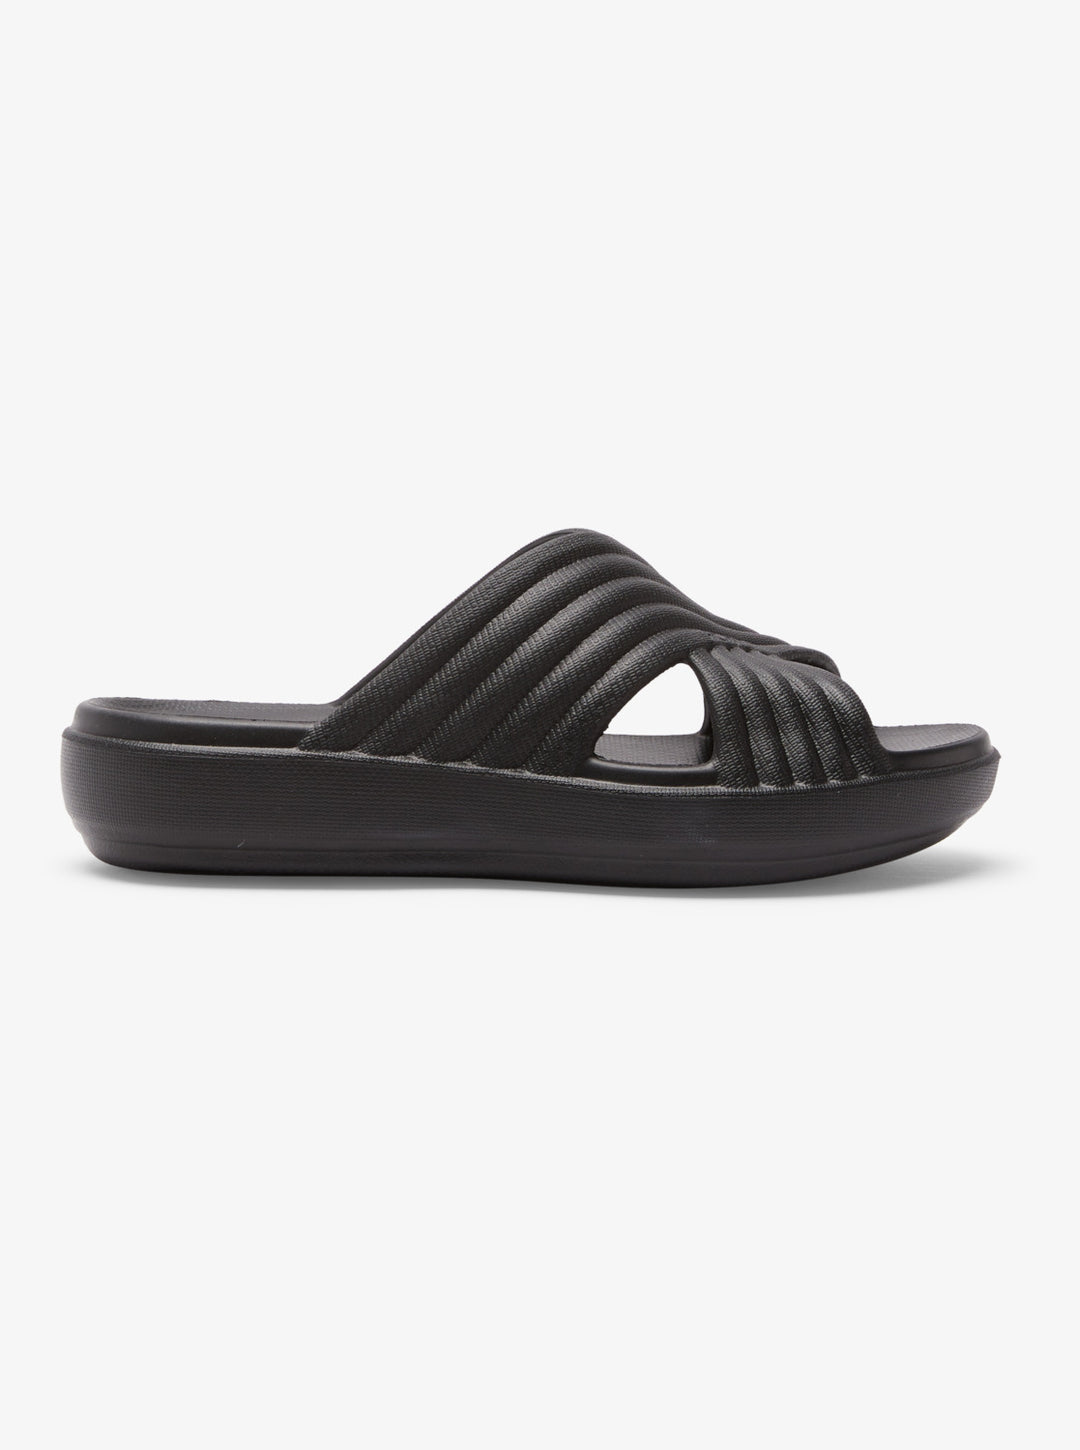 Roxy Rivie Sandals - Black (Side)